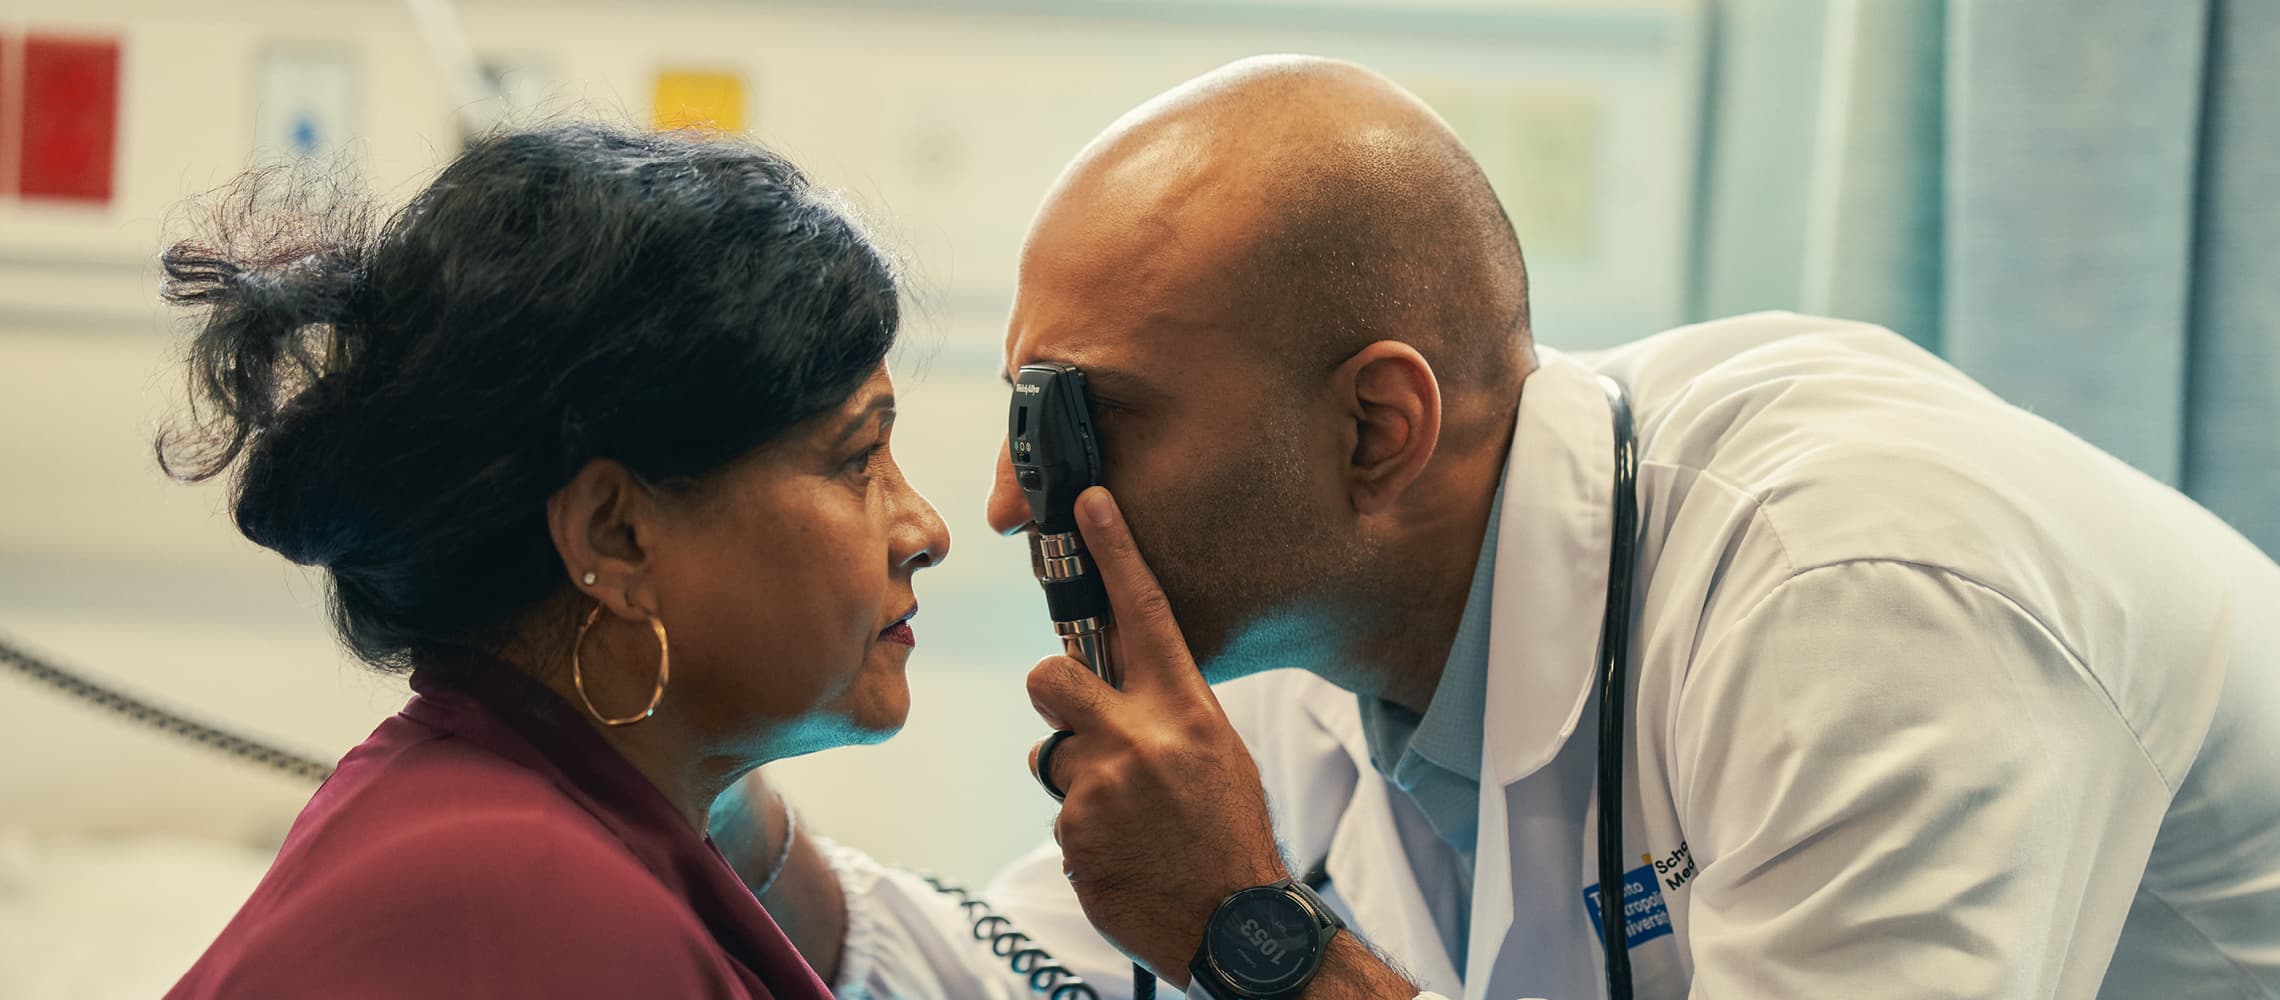 An optometrist examining the eye of an elderly woman using medical equipment